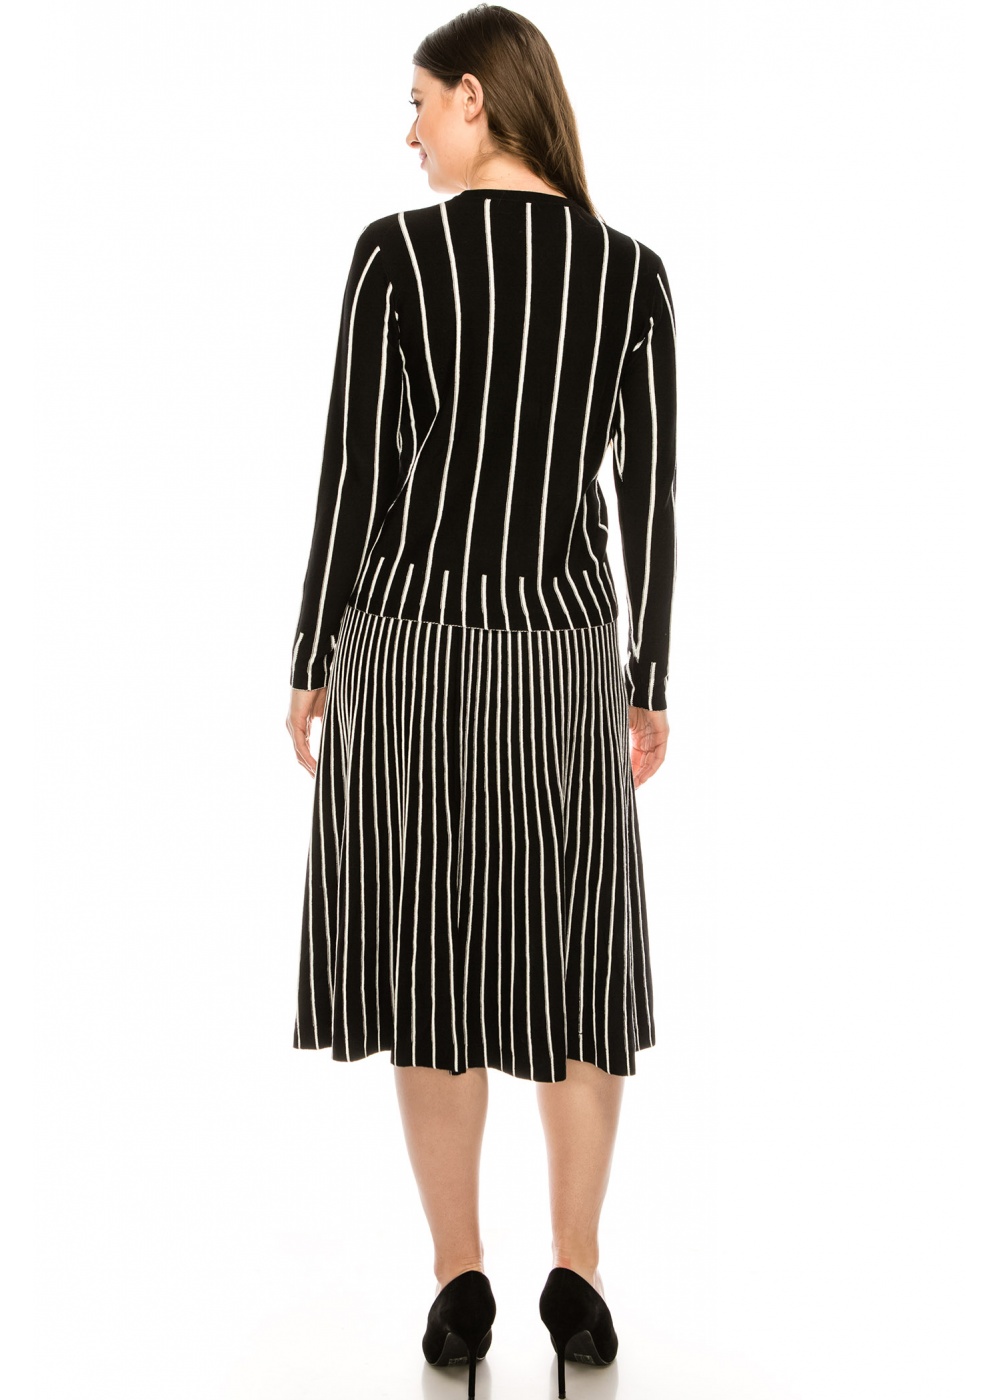 Black and White Striped Skirt